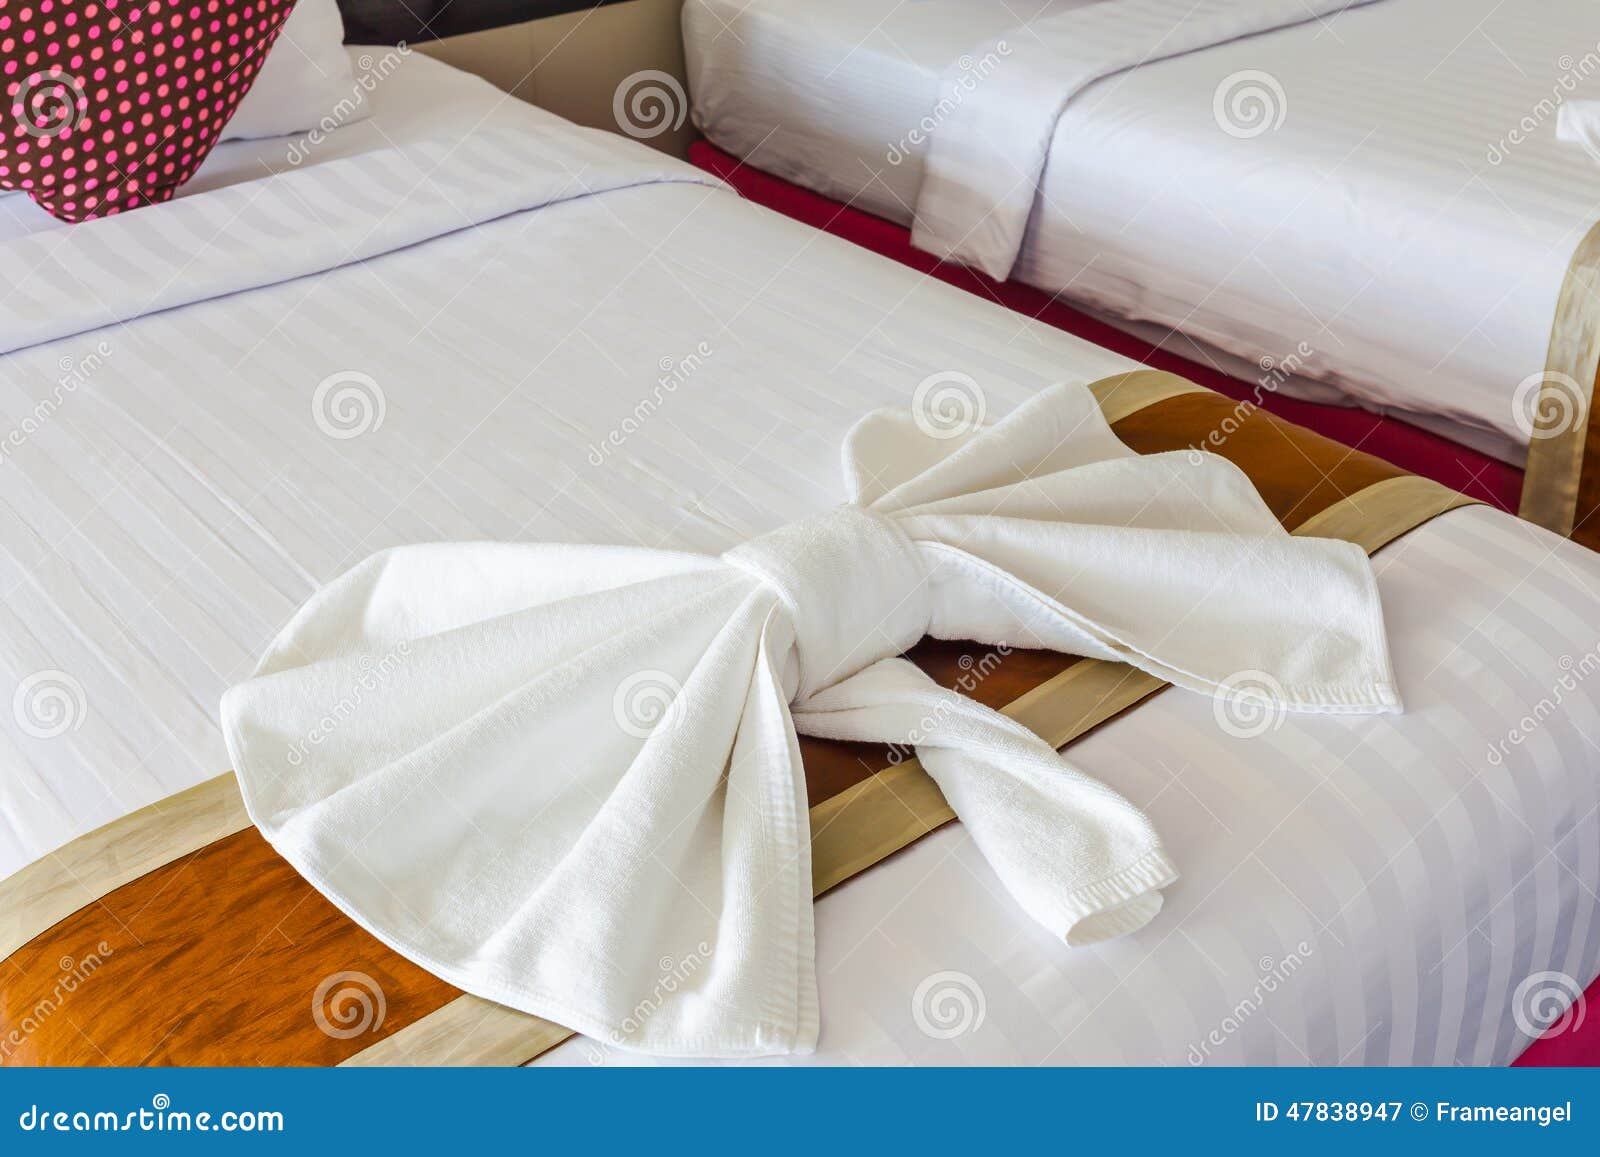 Полотенце на кровати. Полотенца на кровати в гостинице. Красиво сложенные полотенца в гостинице. Полотенца на кровати красиво сложенные. Сложить полотенце красиво в гостинице на кровати.